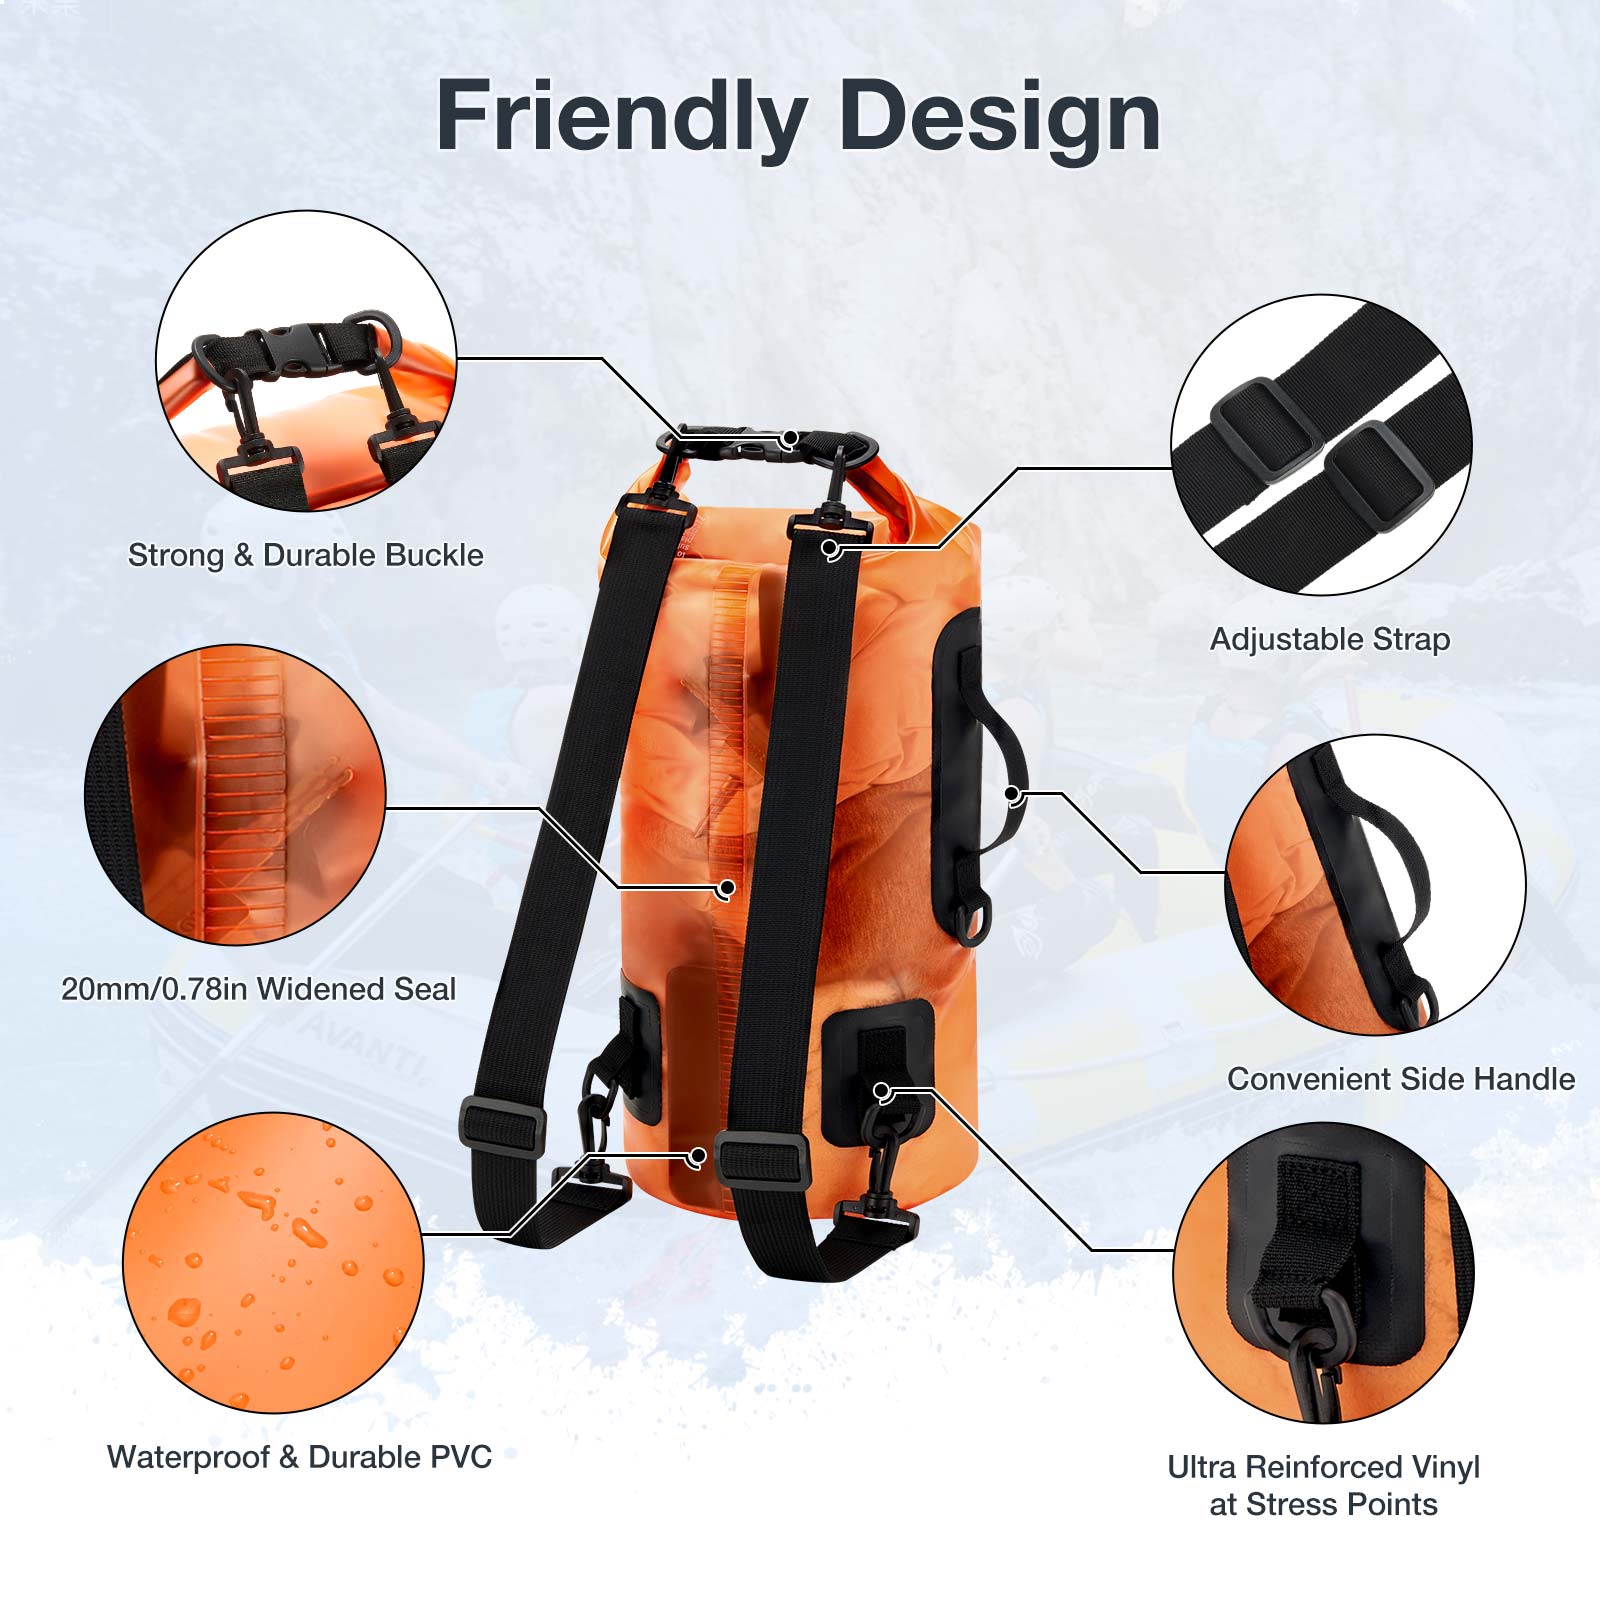 Piscifun® Waterproof Dry Bag with Phone Case Sale